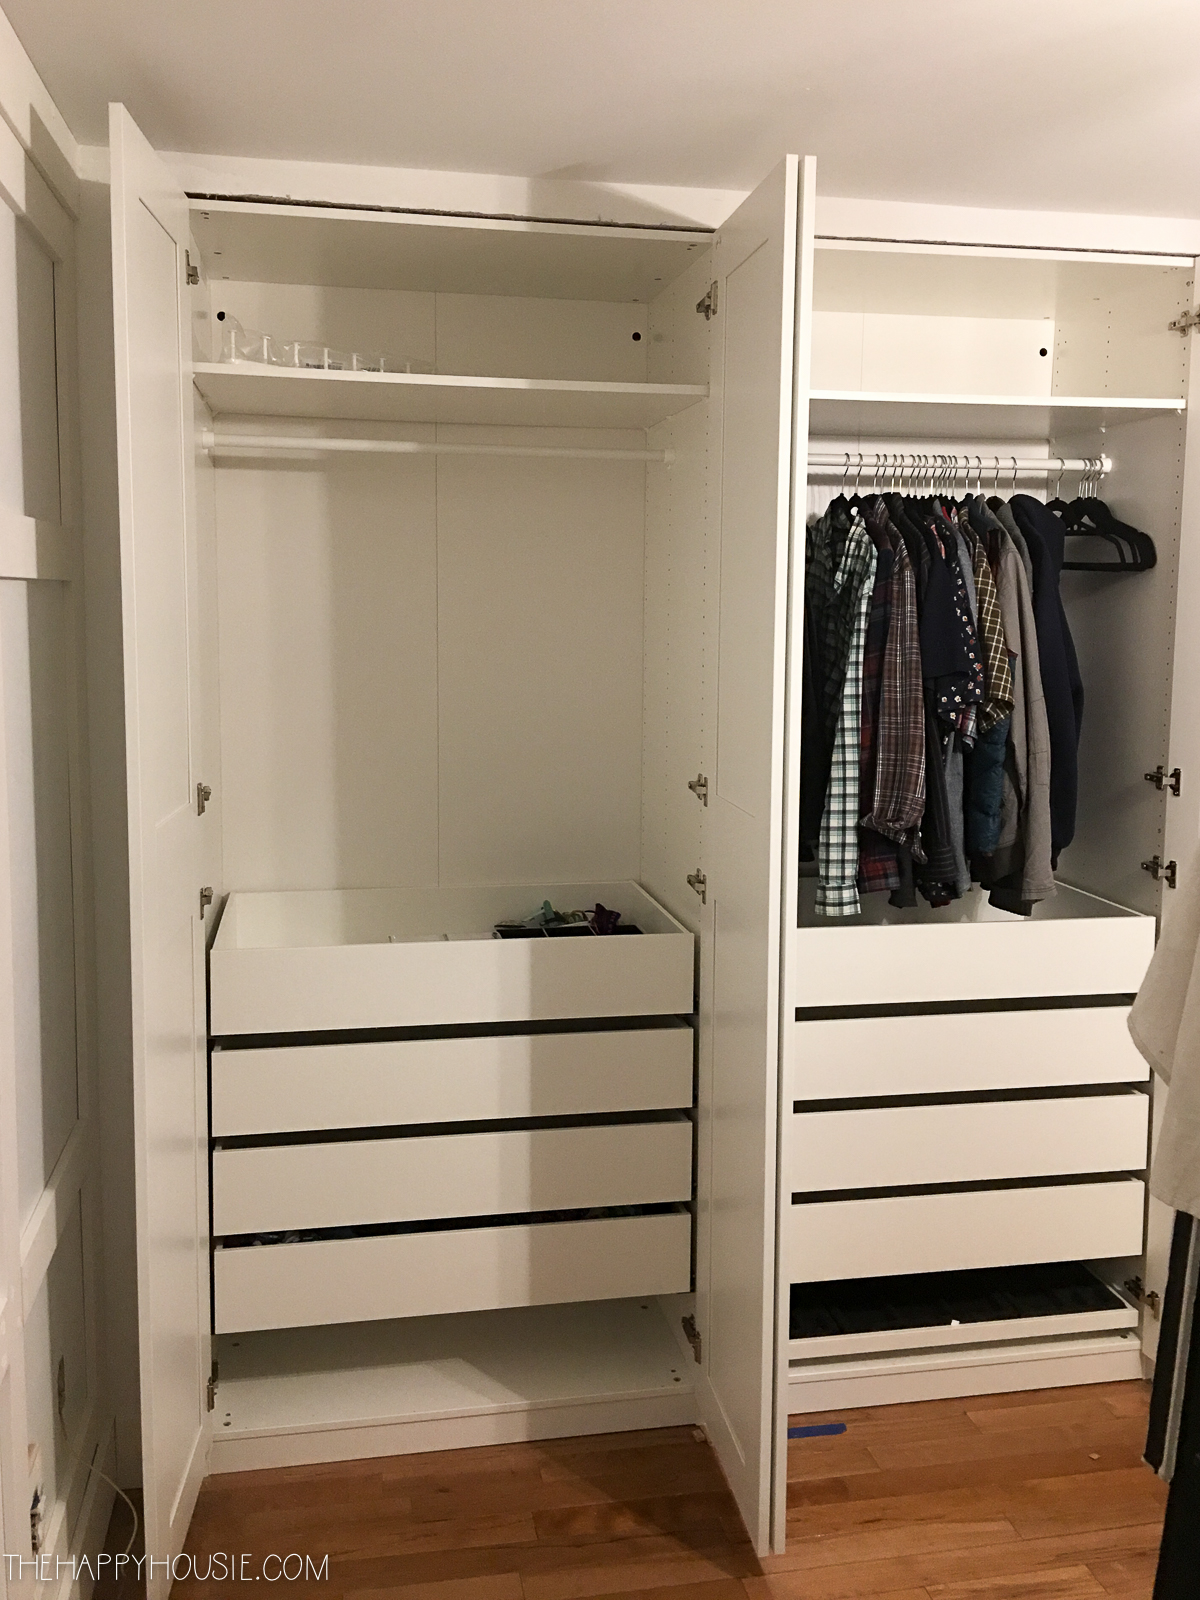 Diy An Organized Closet Big Or Small With The Ikea Pax Wardrobe